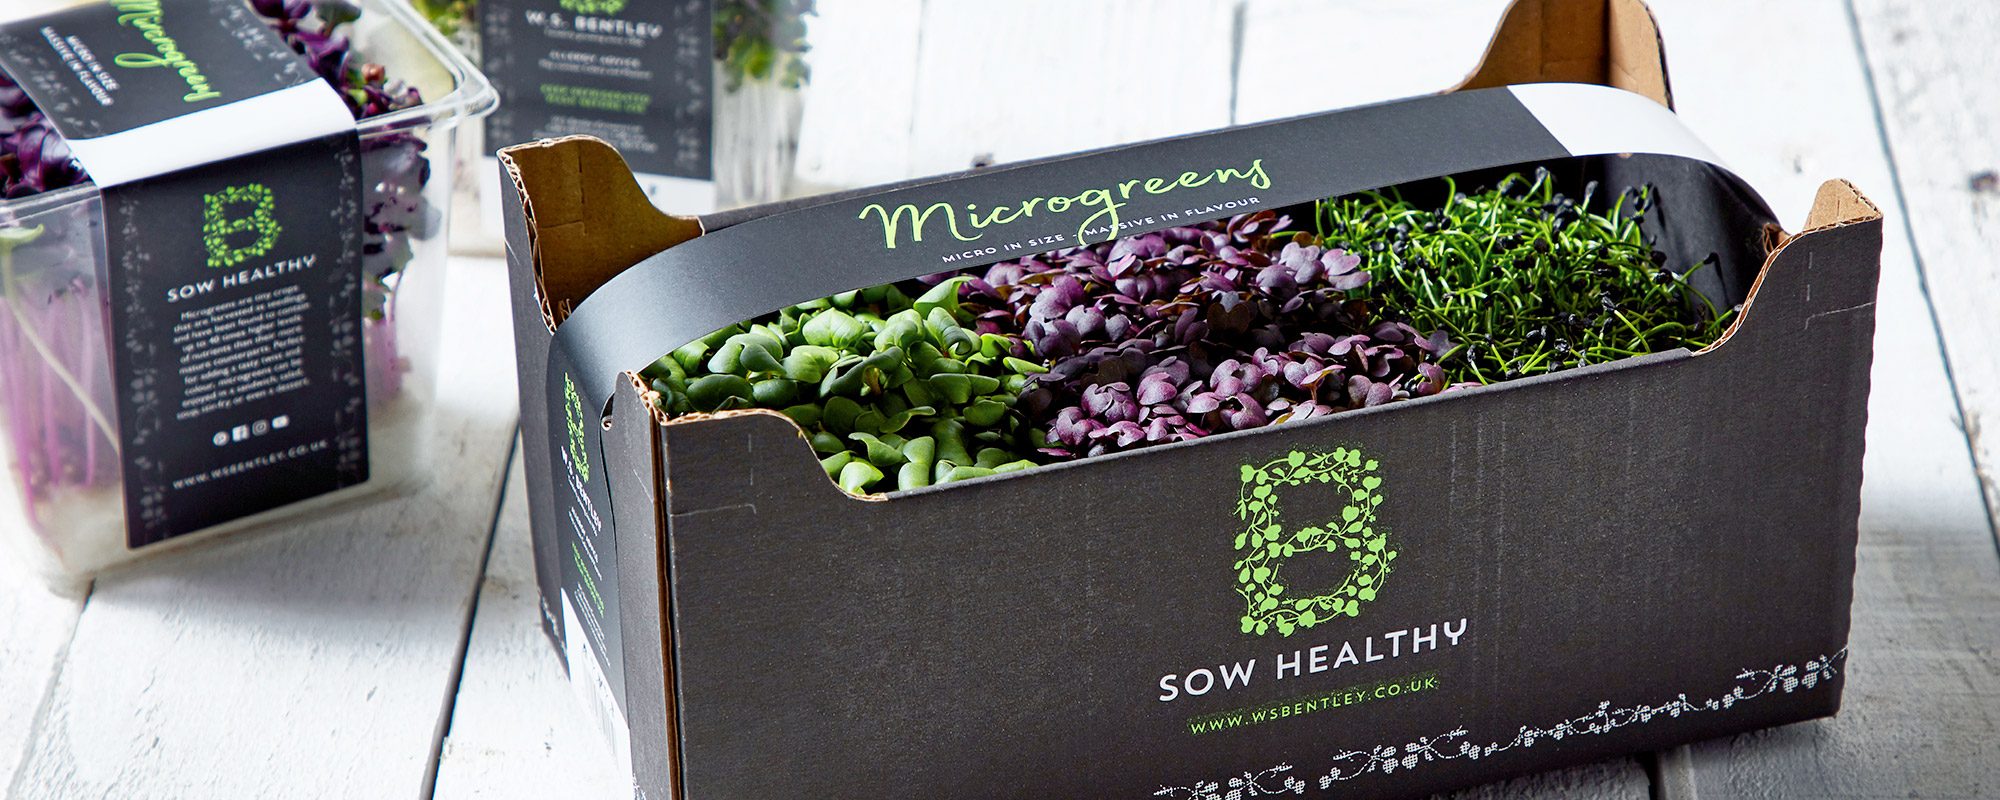 B Sow Healthy Microgreens